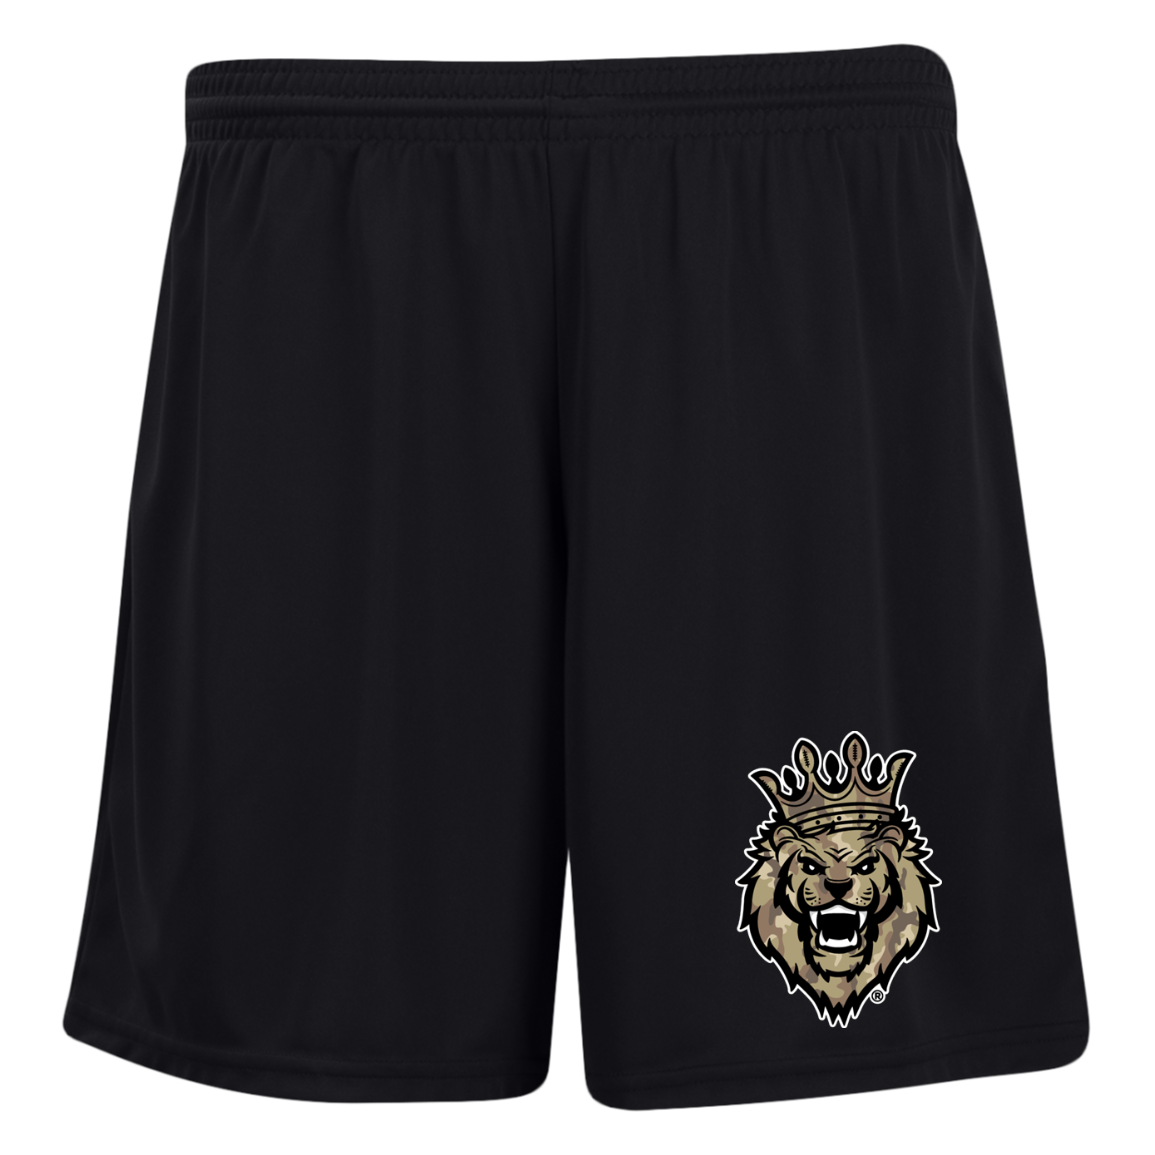 Respect The Roar® (Tan) Ladies' 7 inch Inseam Shorts